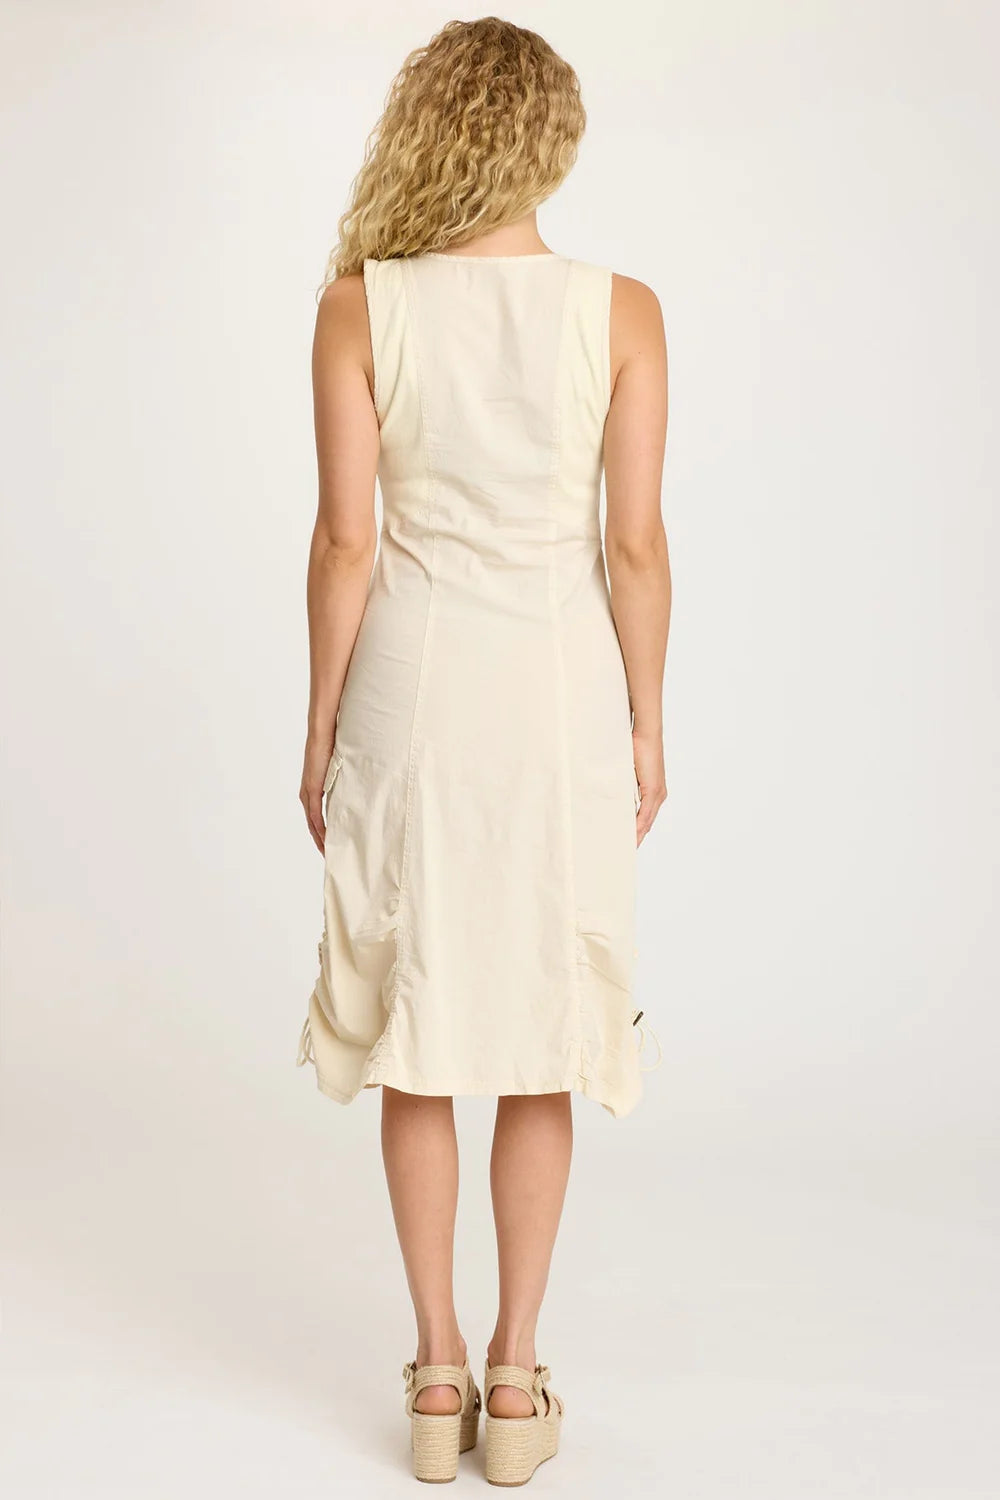 XCVI's Janelle Dress Wind Chill